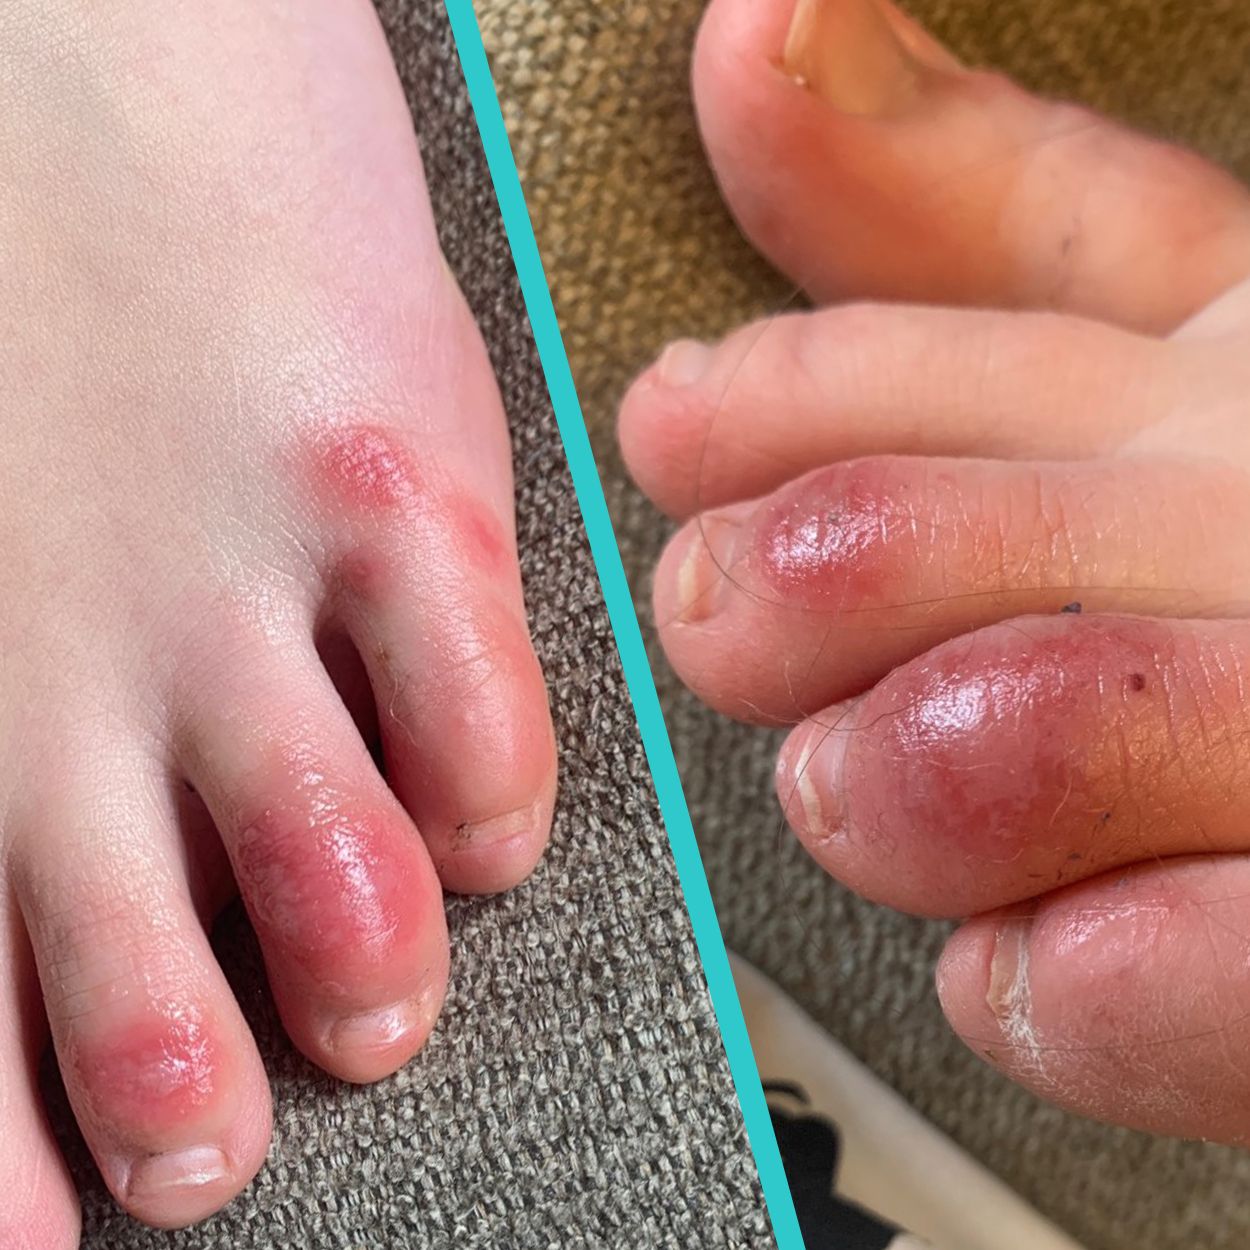 cracked skin under pinky toe